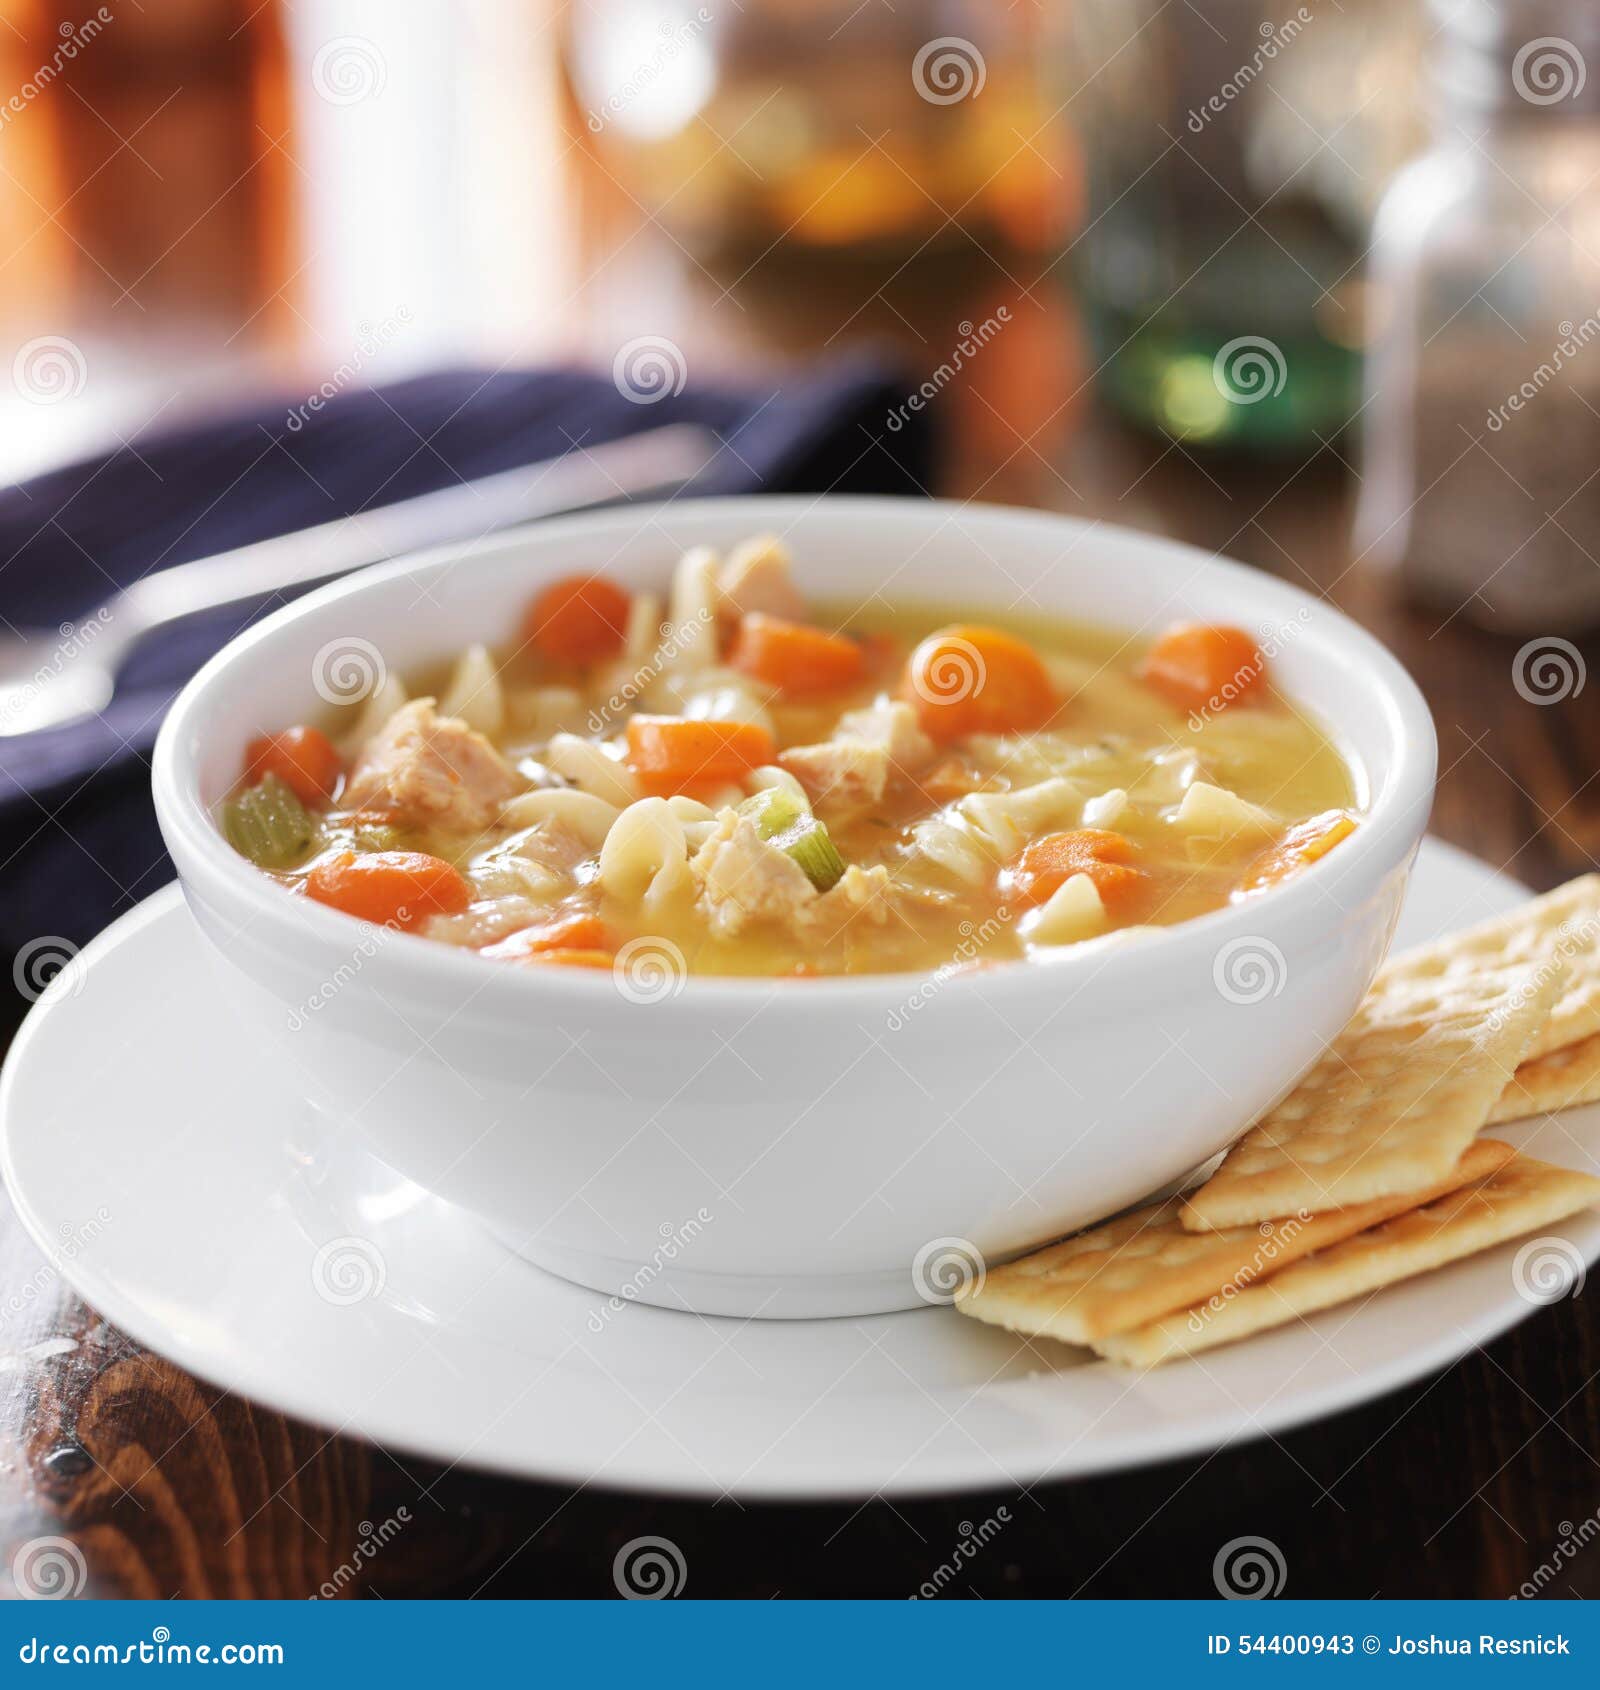 Hot Bowl of Chicken Noodle Soup Stock Image - Image of nourishment,  noodles: 54400943